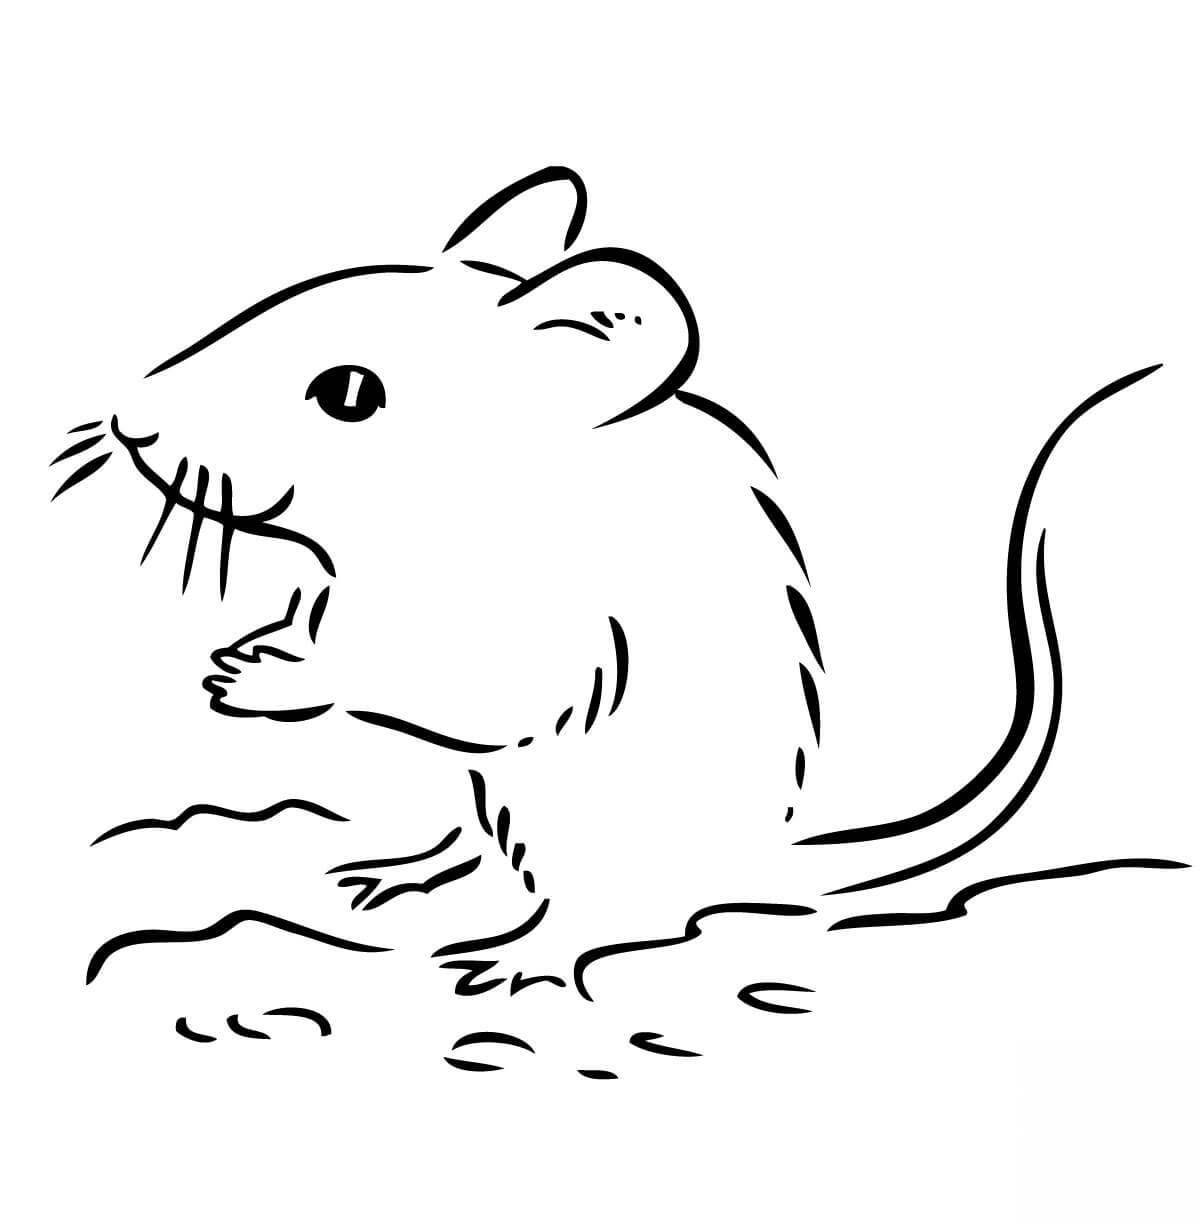 Увлекательная страница раскраски harvest mouse